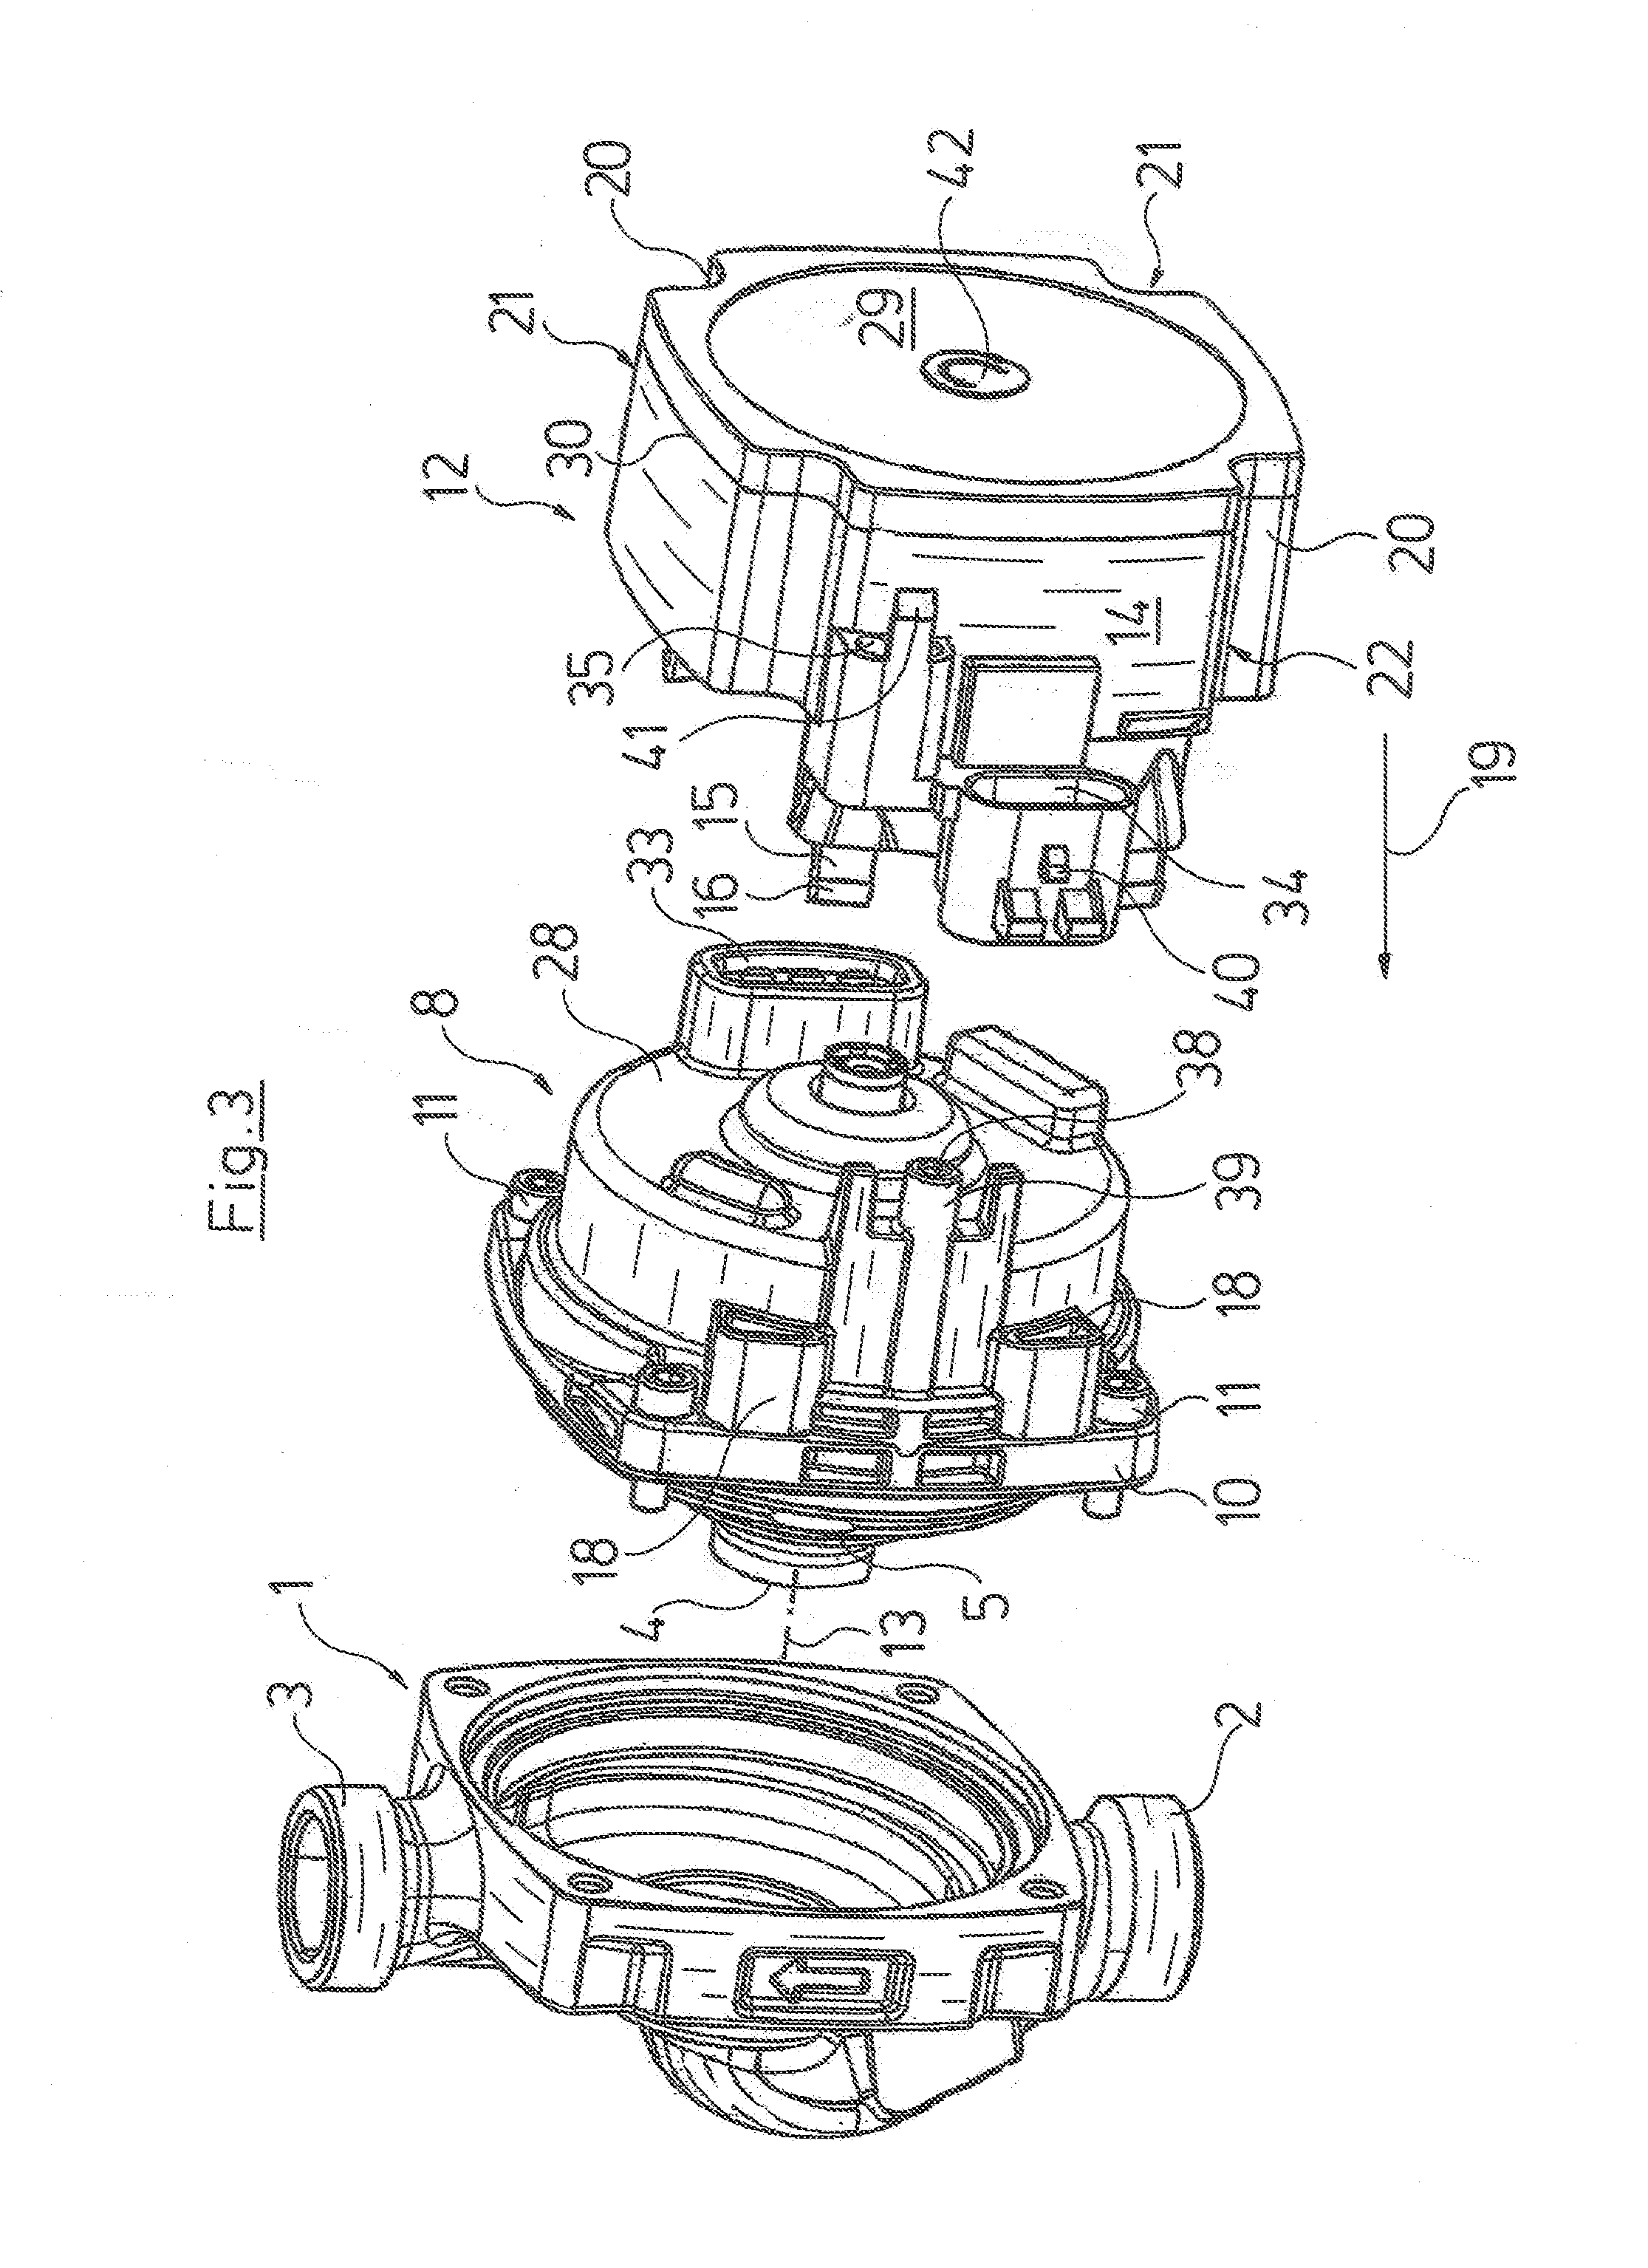 Heat circulation pump